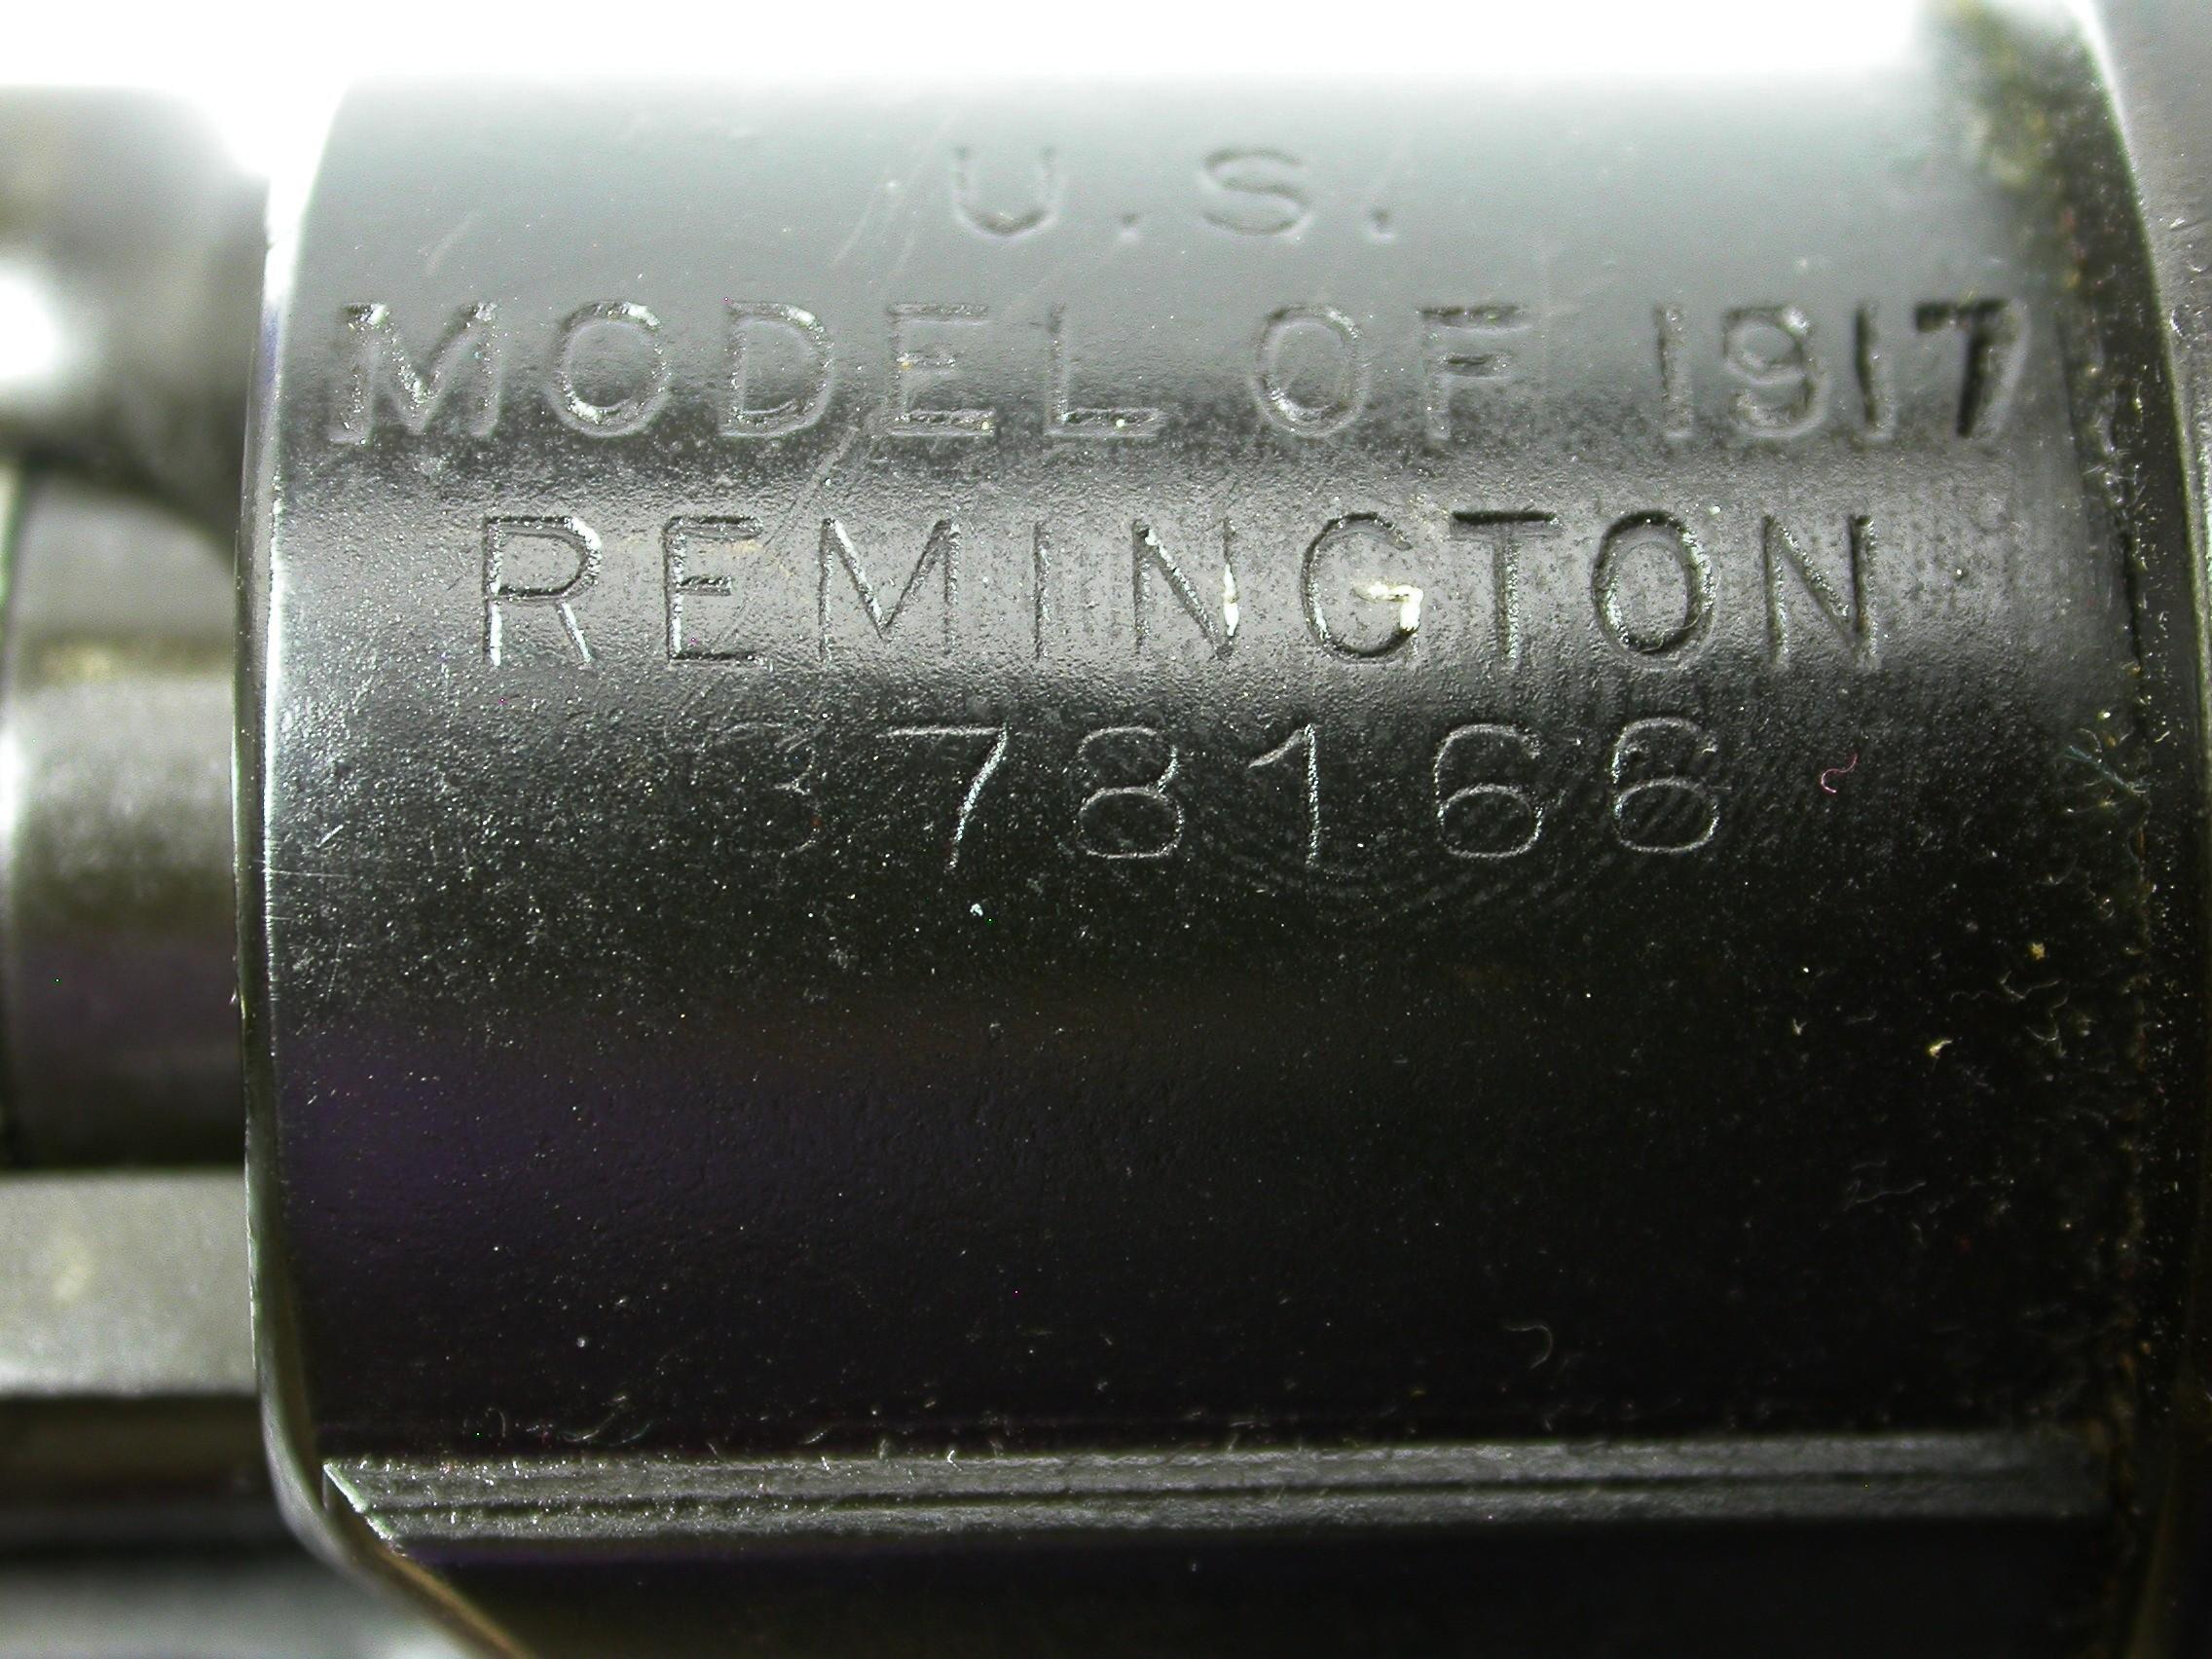 US Military WWI M1917 Enfield 30-06 Bolt-Action Rifle - FFL #378166 (RH1)